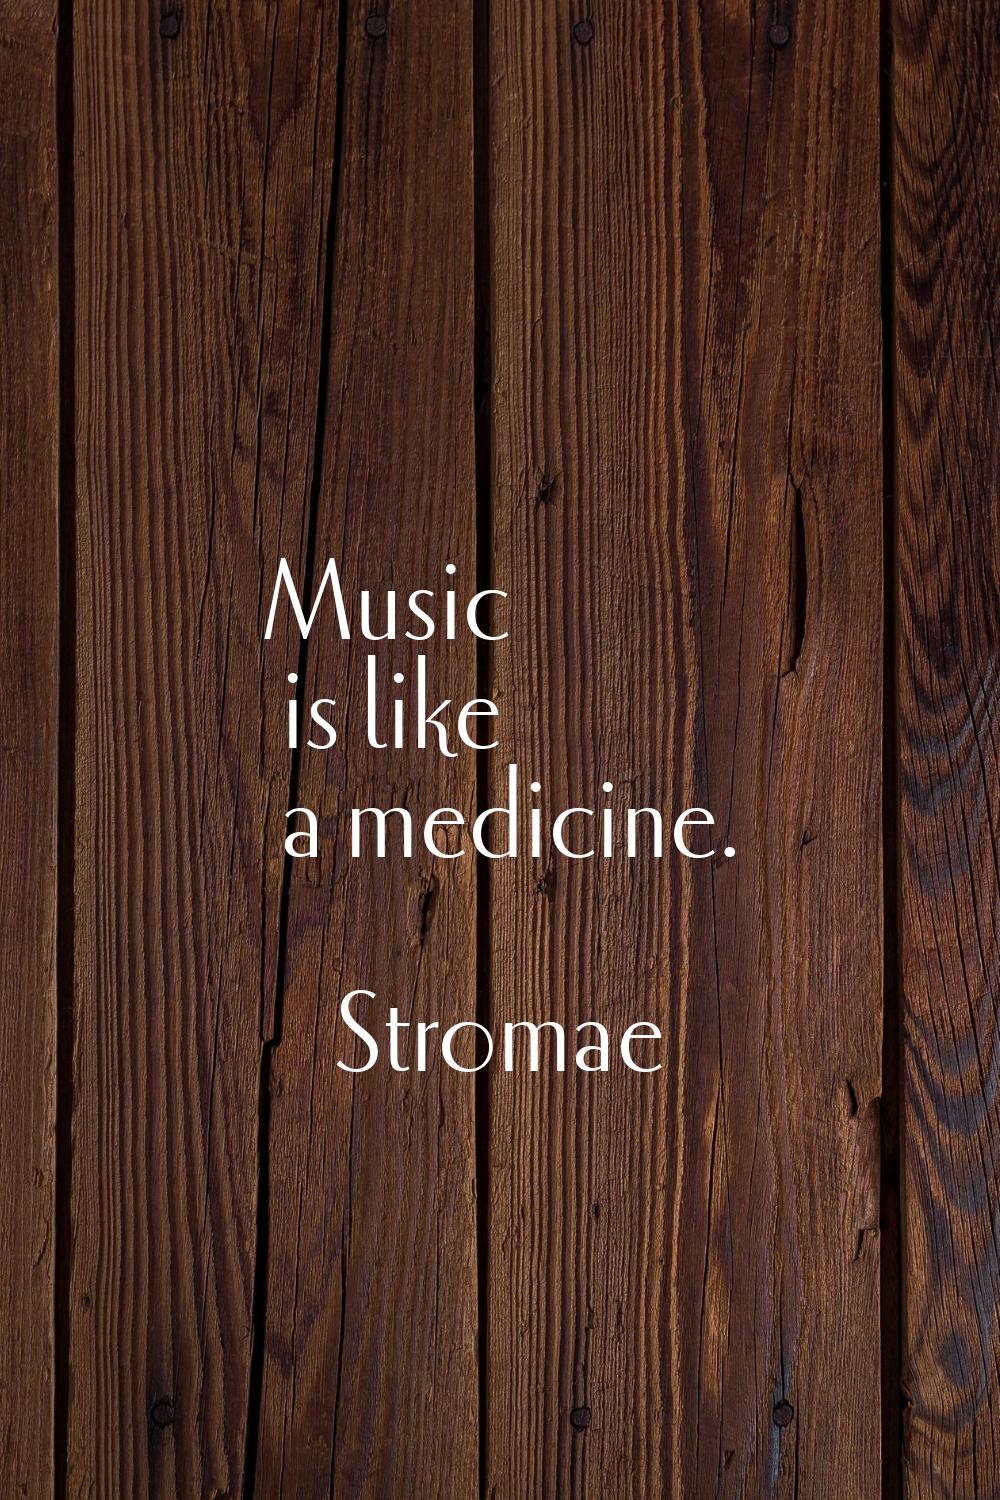 Music is like a medicine.